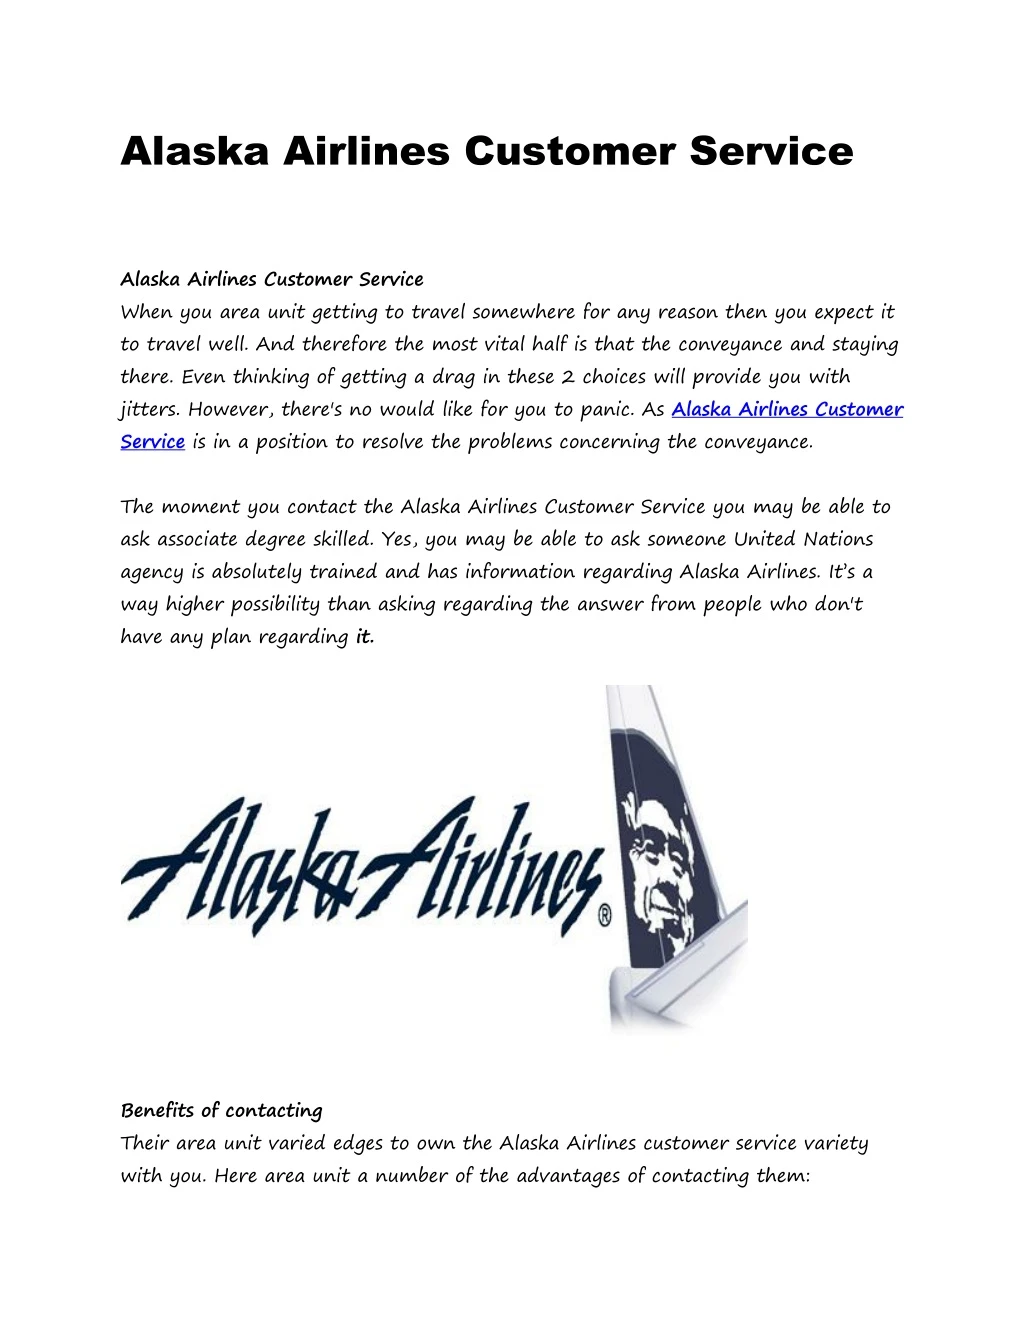 PPT Alaska Airlines Customer Service PowerPoint Presentation, free